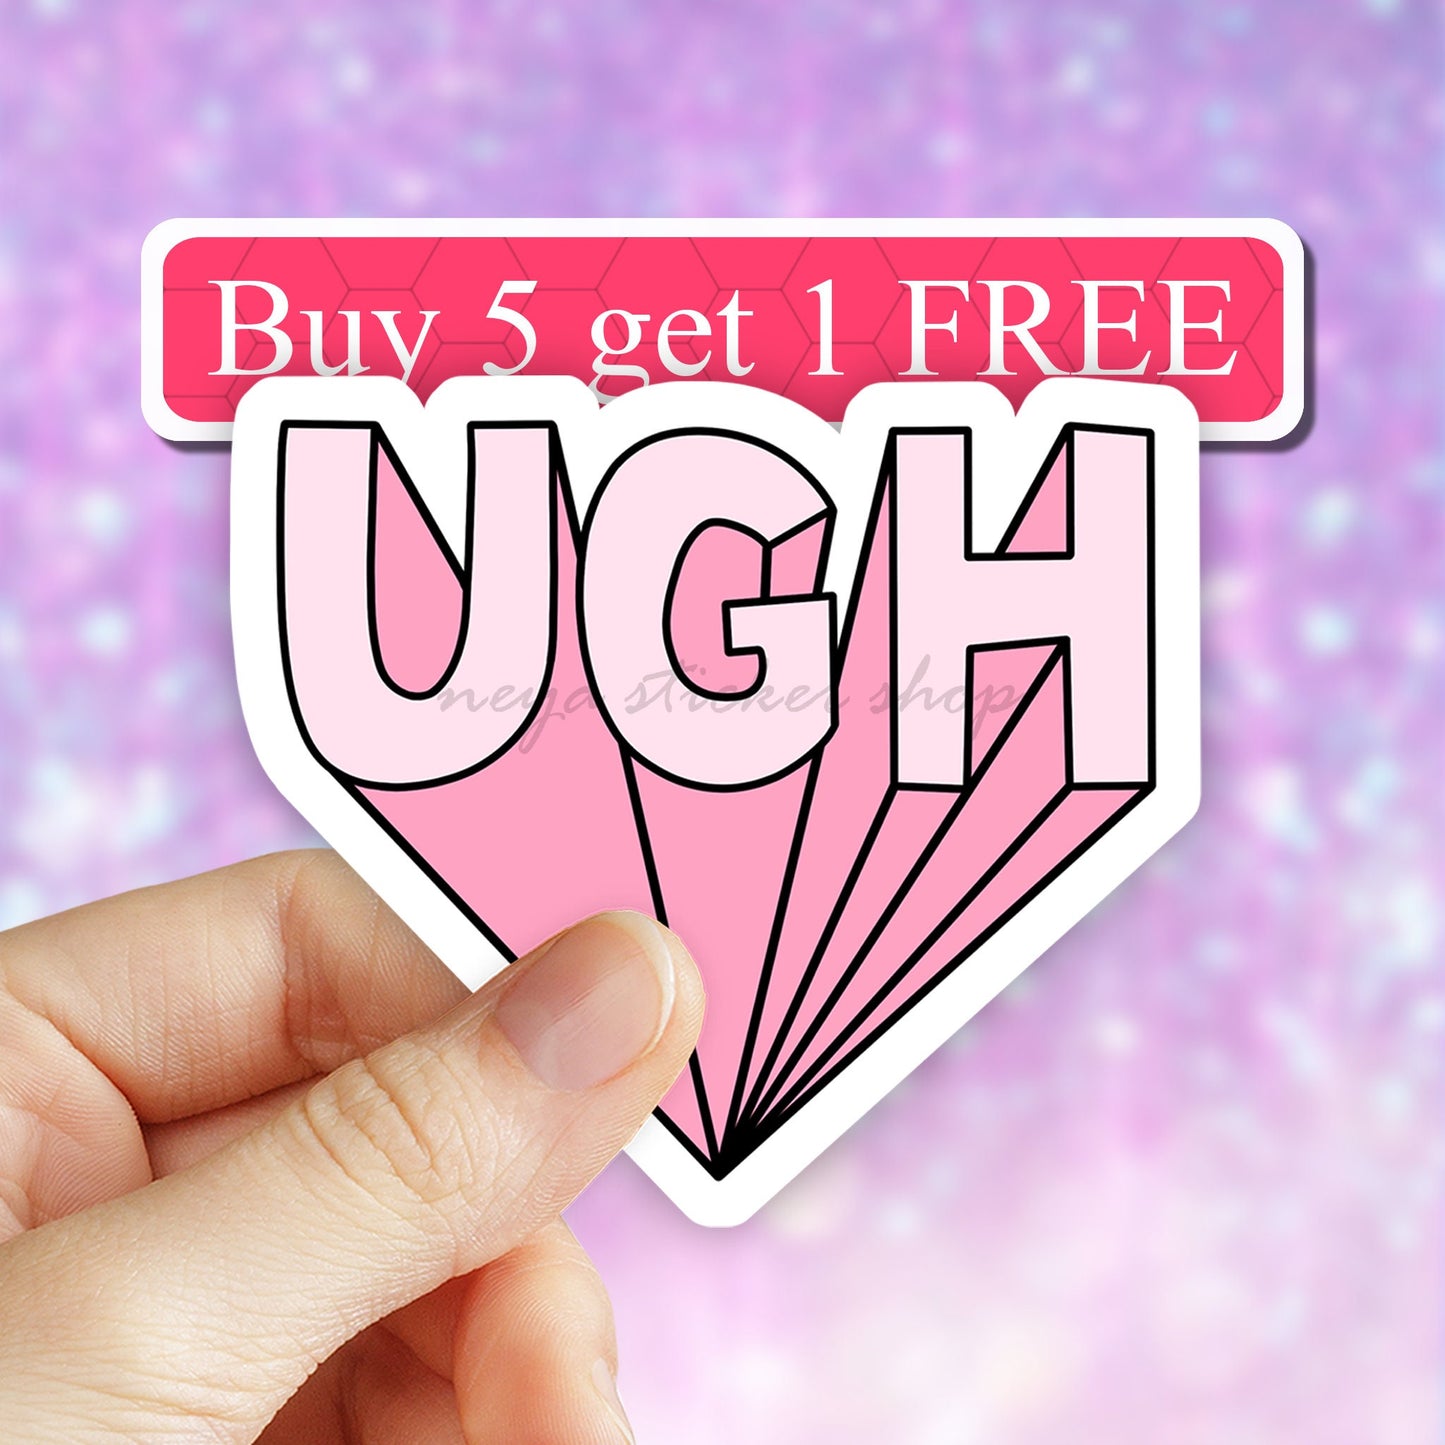 UGH Sticker, Sassy Pink Sticker, Laptop Decal, Best friend Gift, Laptop Stickers, Aesthetic Stickers, Water bottle Stickers, Vinyl Stickers